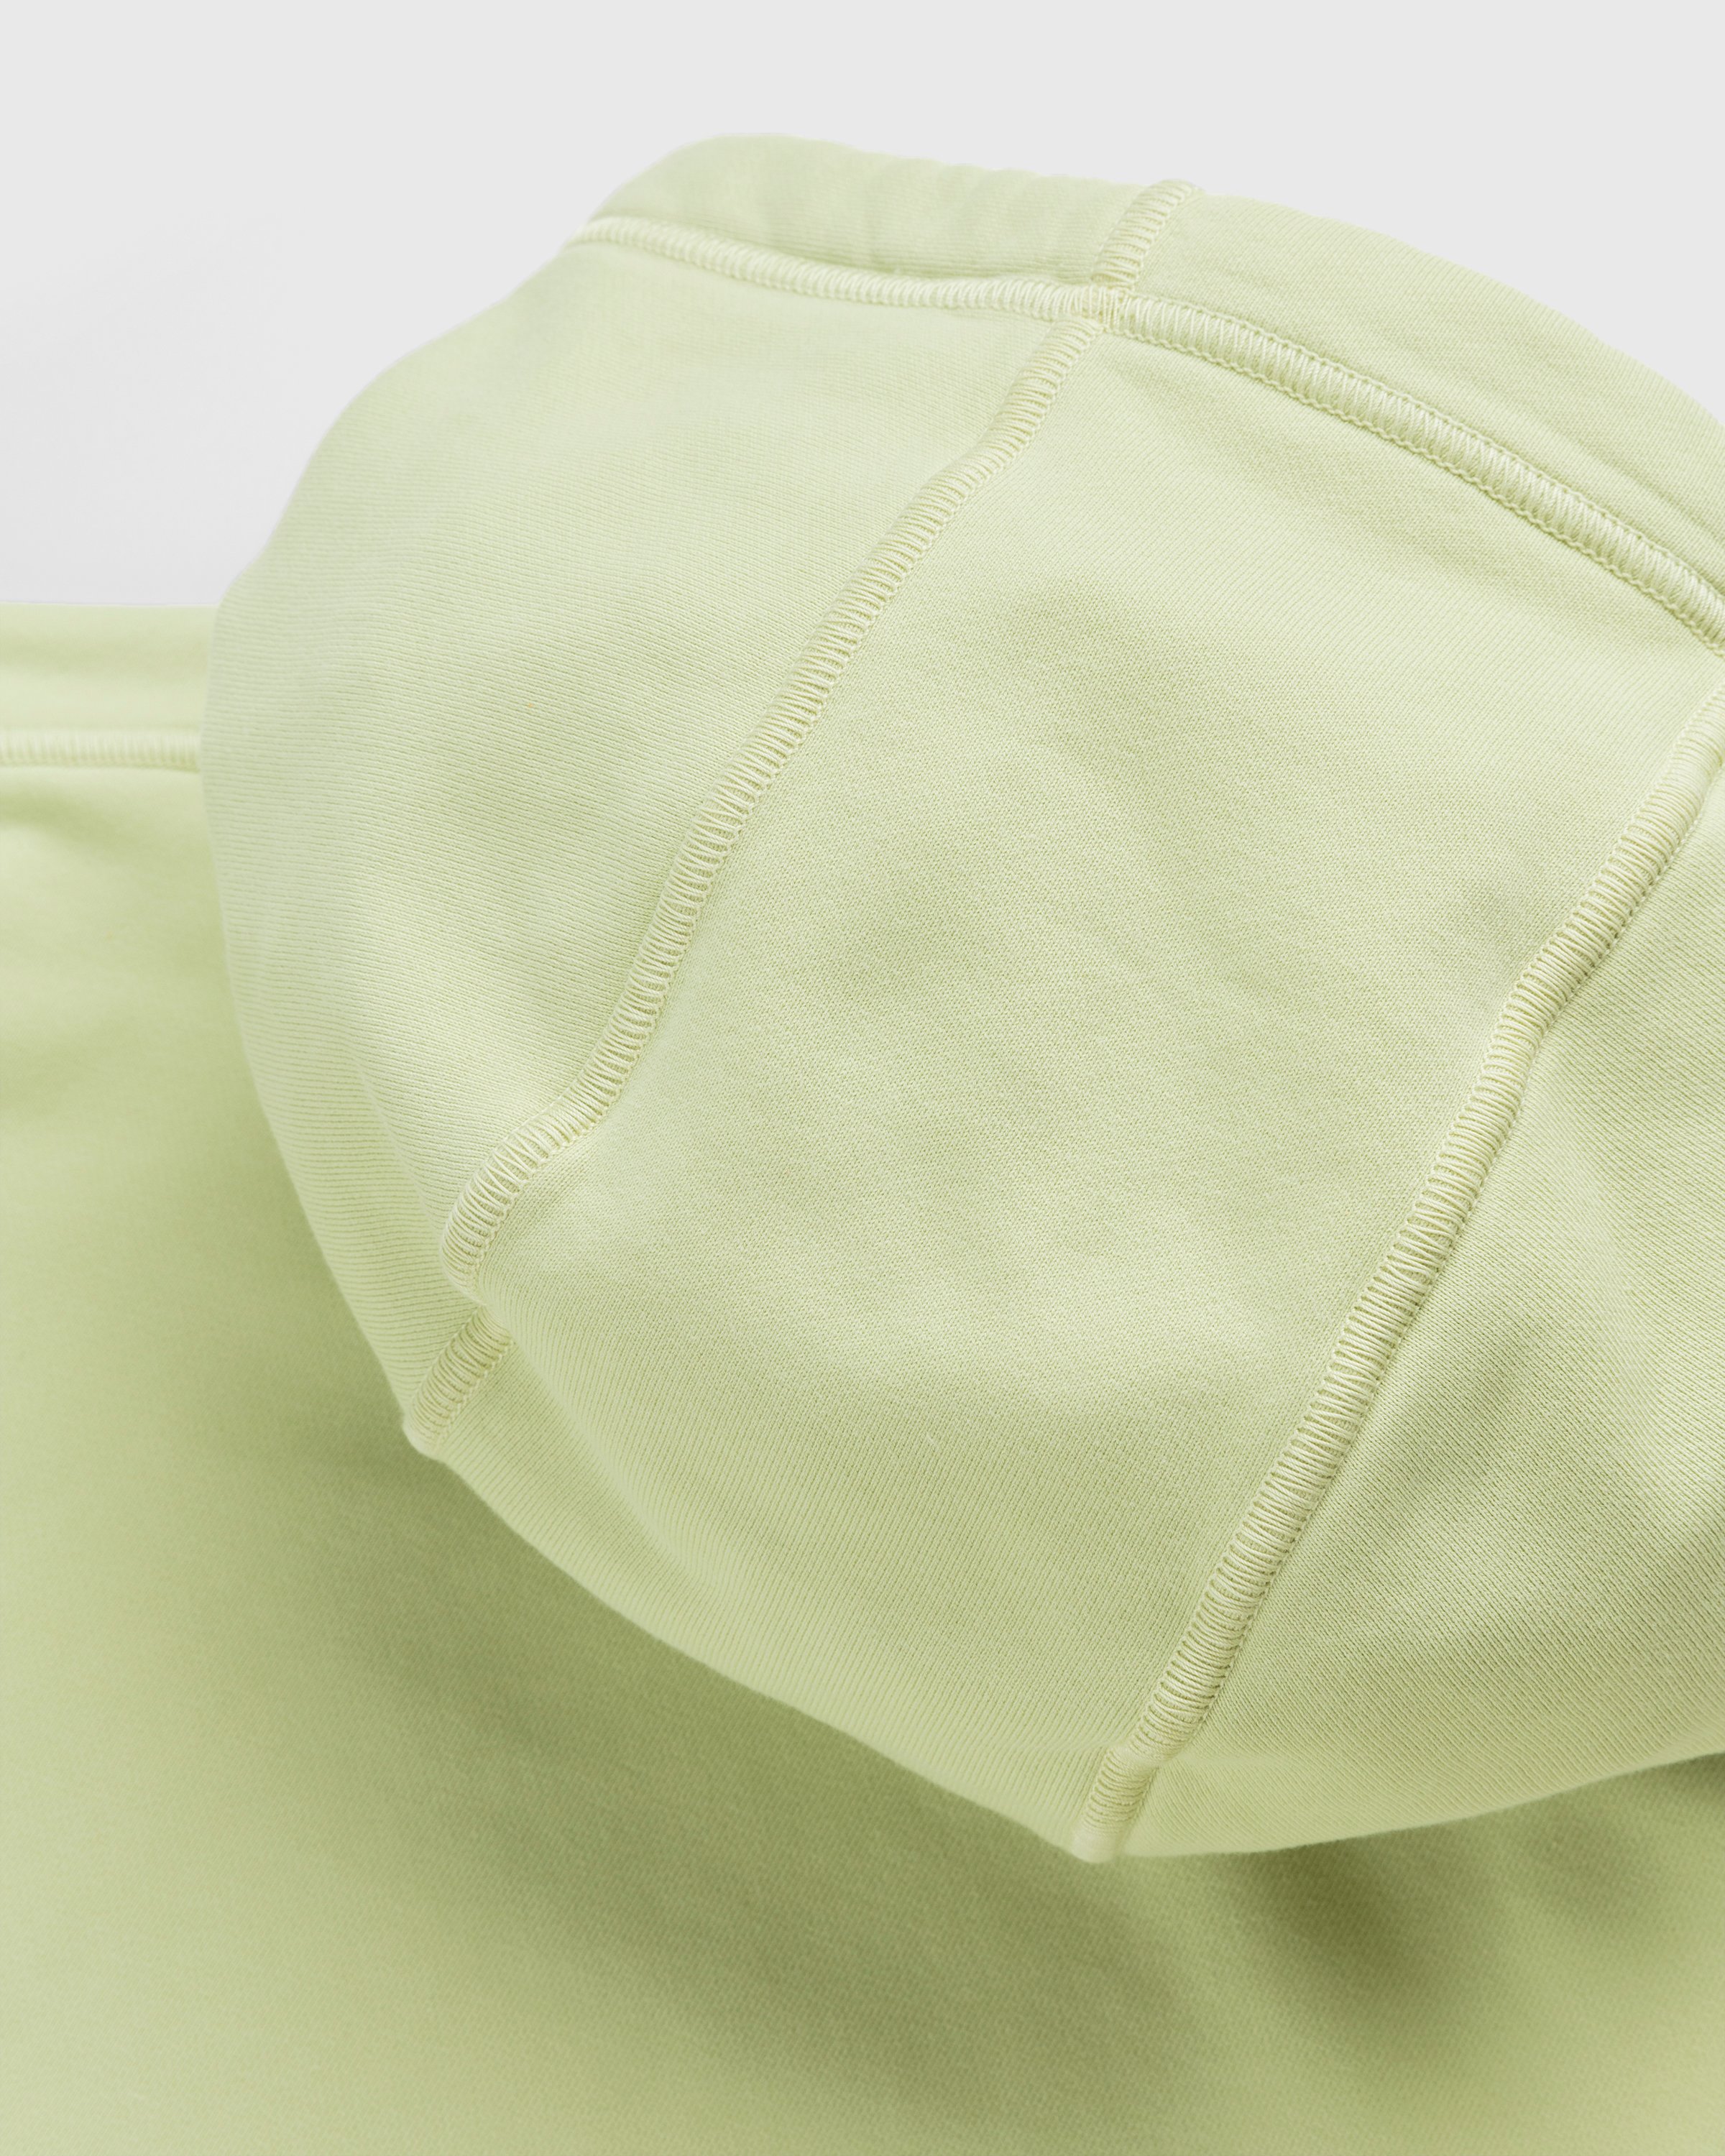 Stone Island - 64151 Garment-Dyed Cotton Fleece Hoodie Light Green - Clothing - Green - Image 3